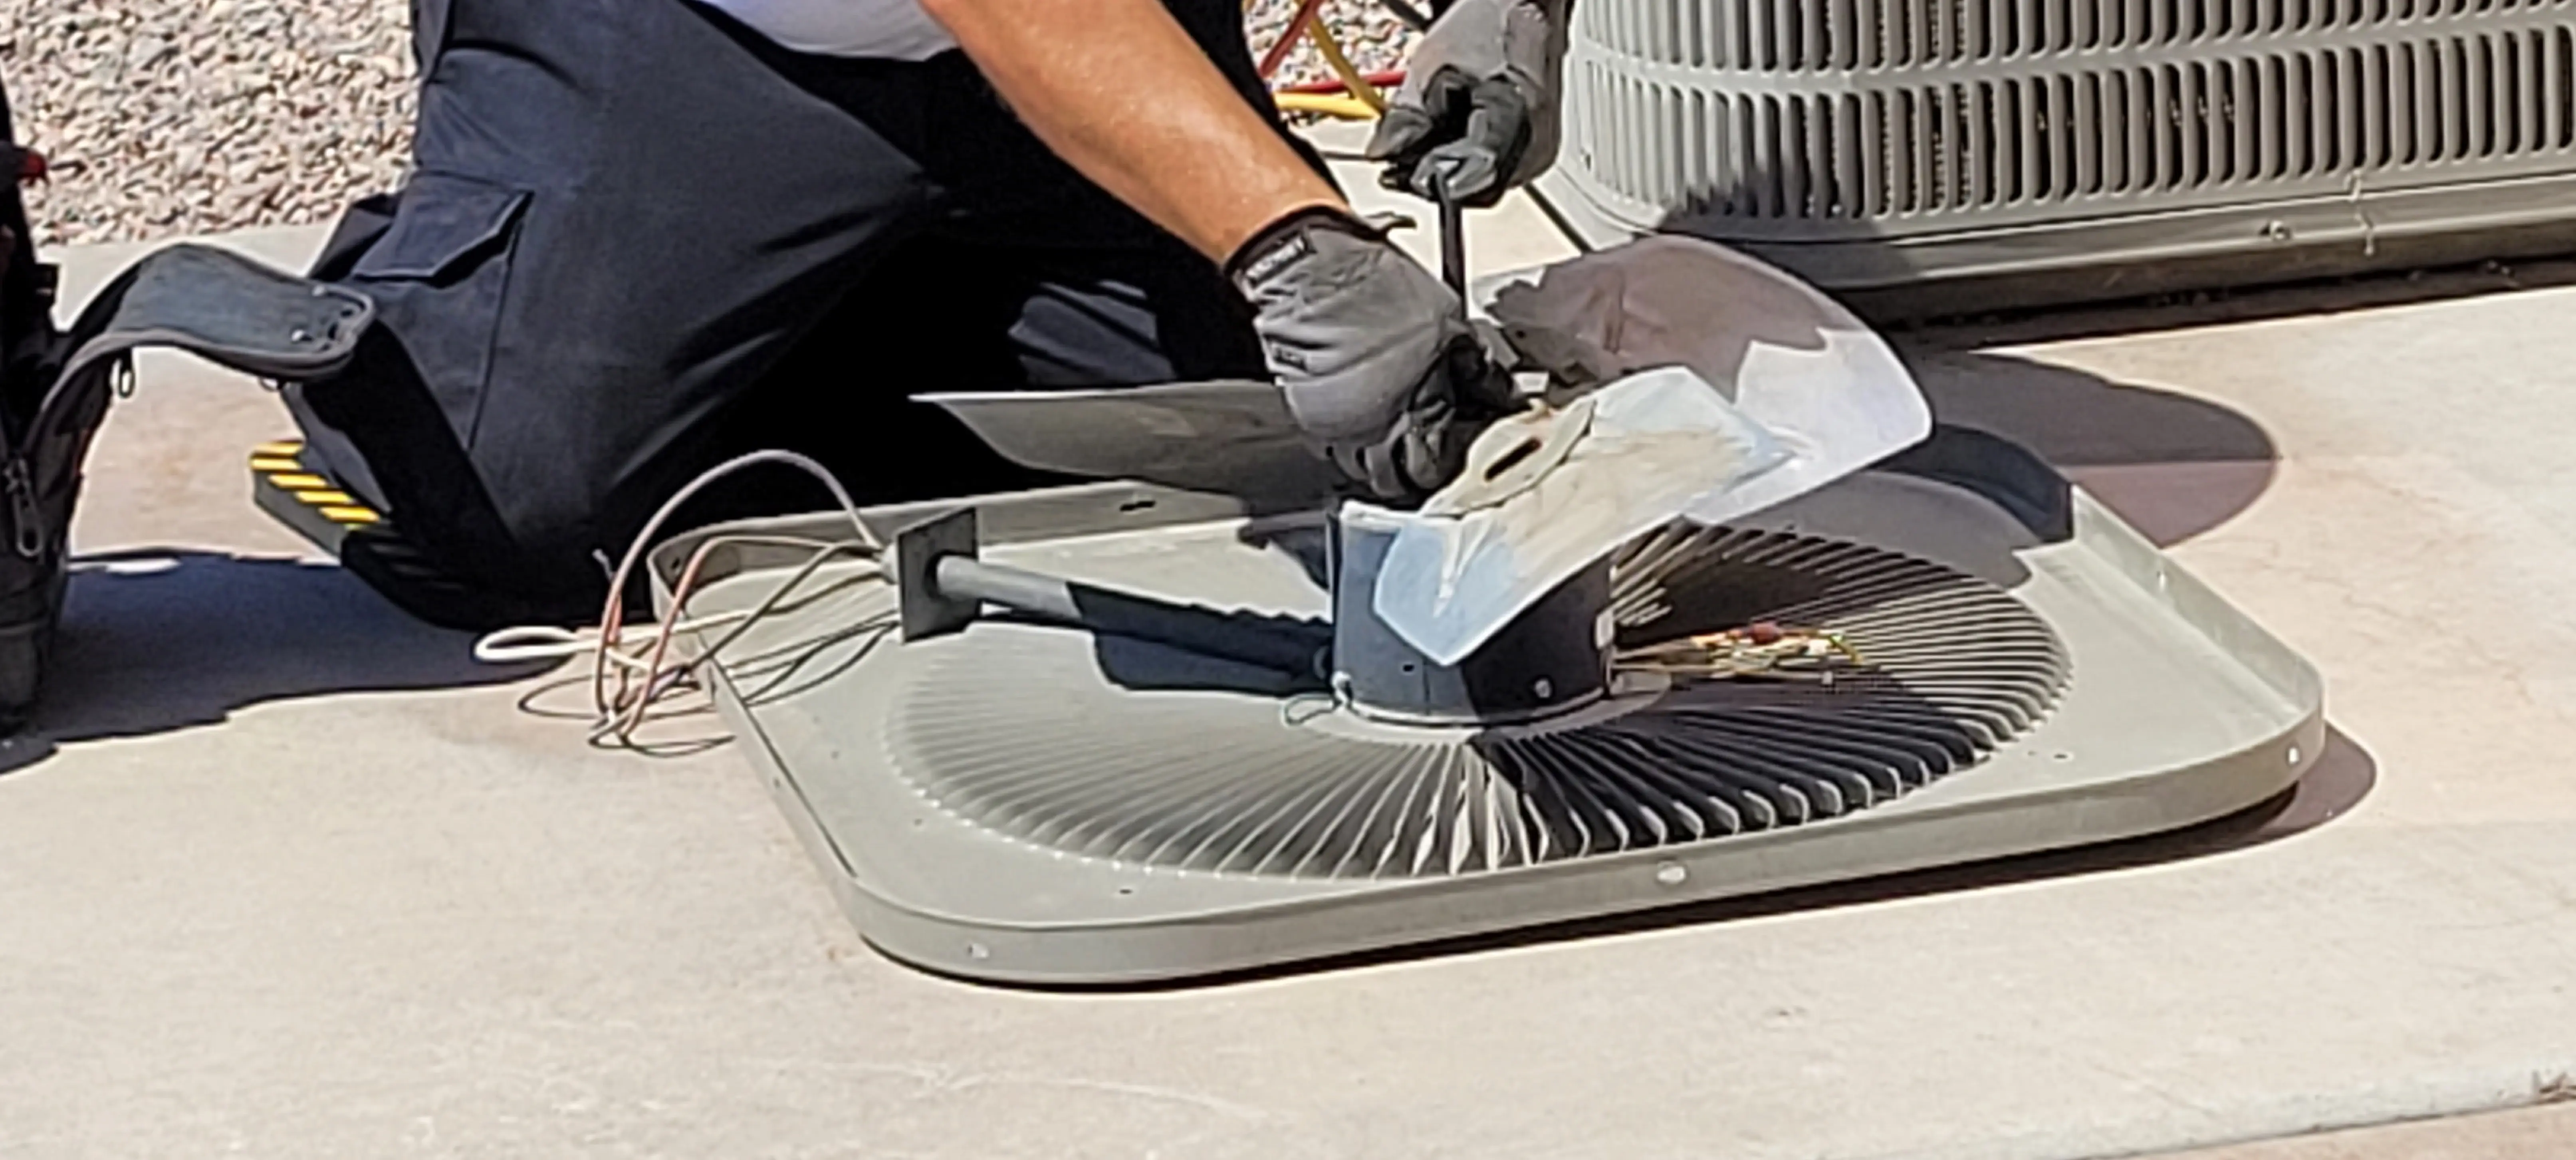 Air-Conditioning-Repair--in-Luling-Texas-Air-Conditioning-Repair-4296816-image